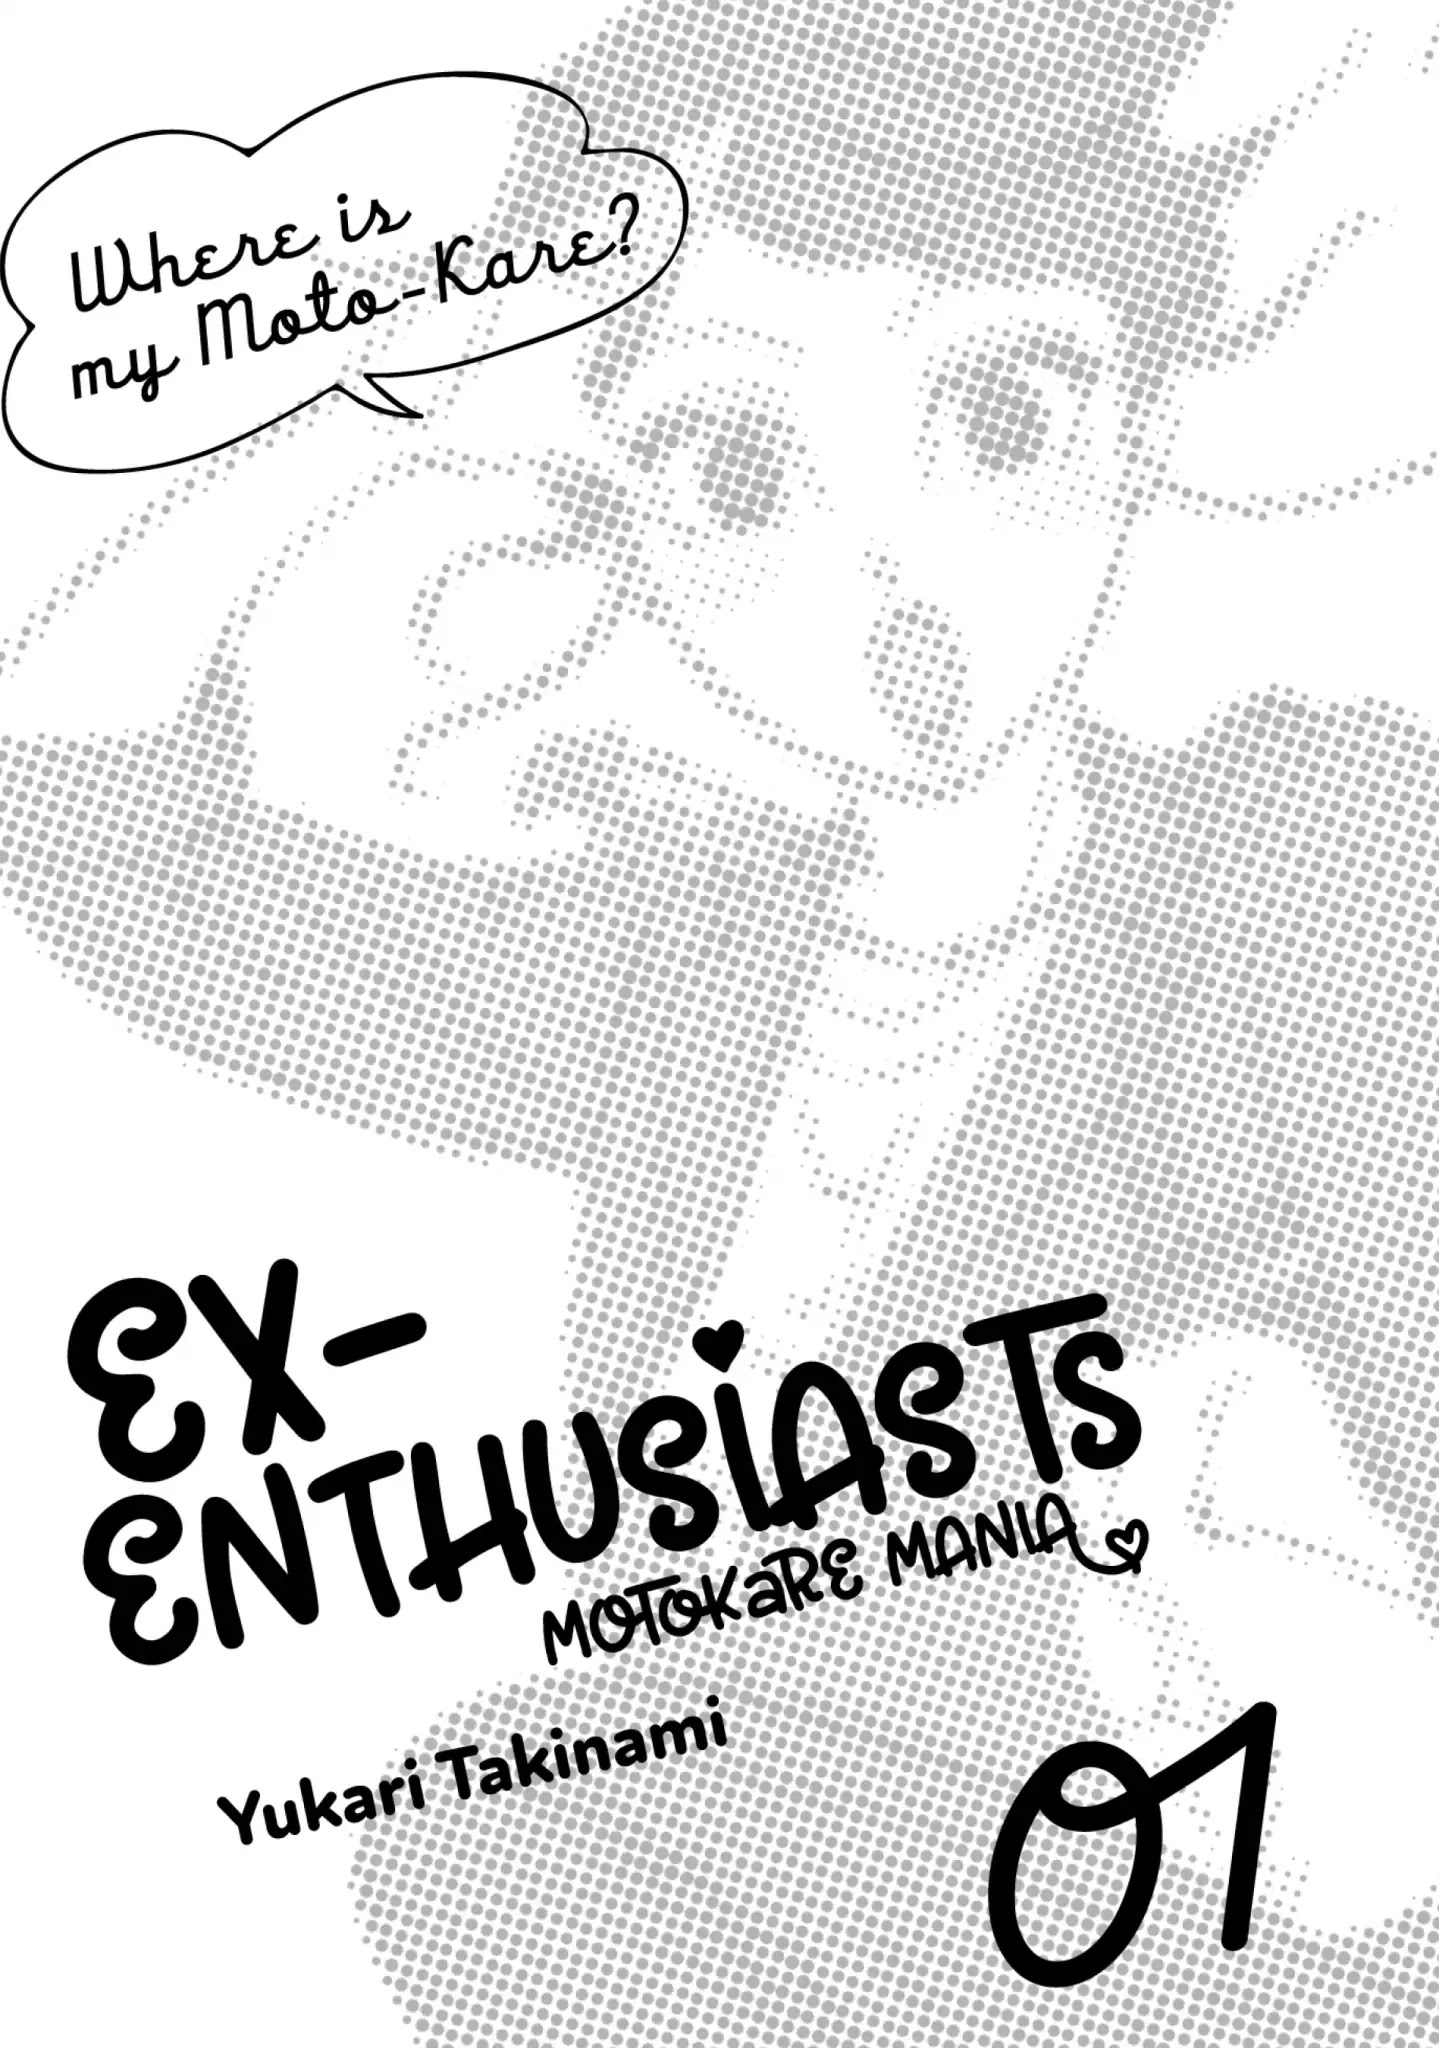 Ex-Enthusiasts: Motokare Mania - Page 2